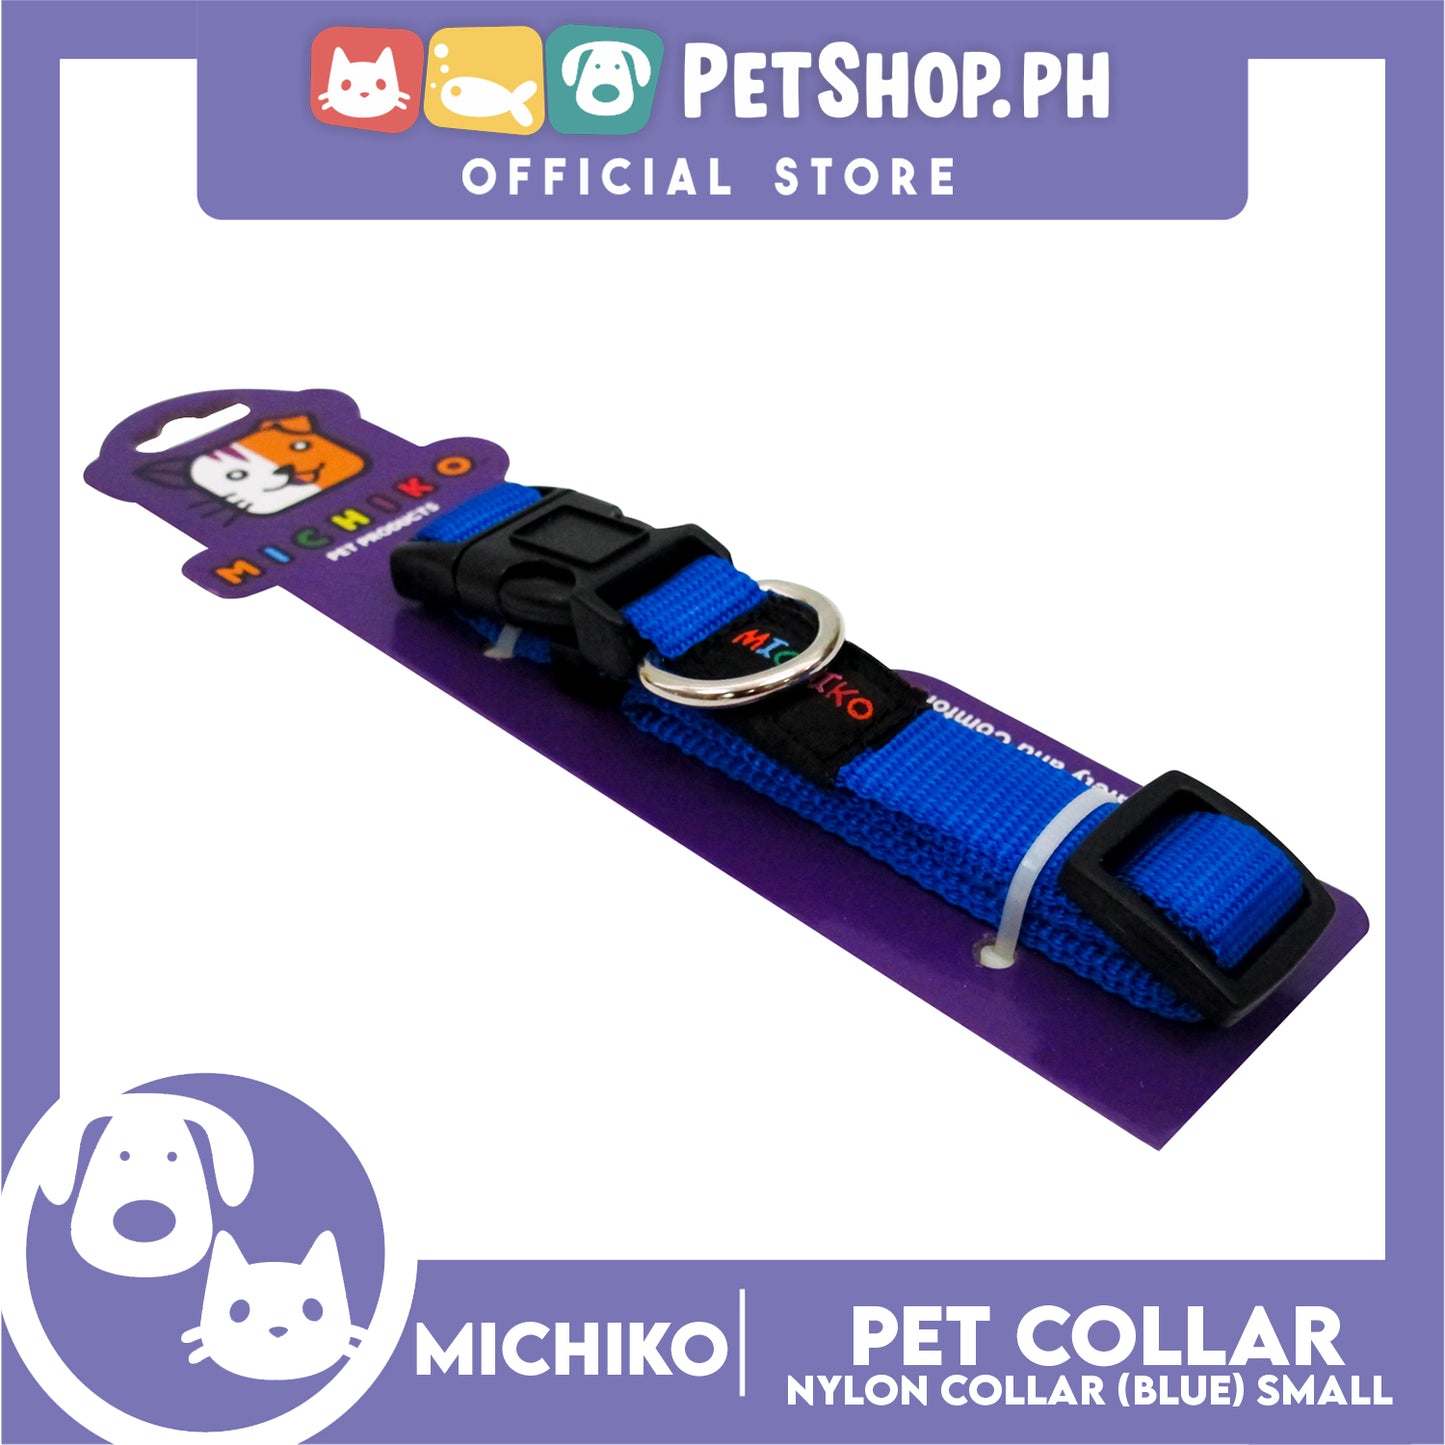 Michiko Nylon Collar Blue (Small) Pet Collar